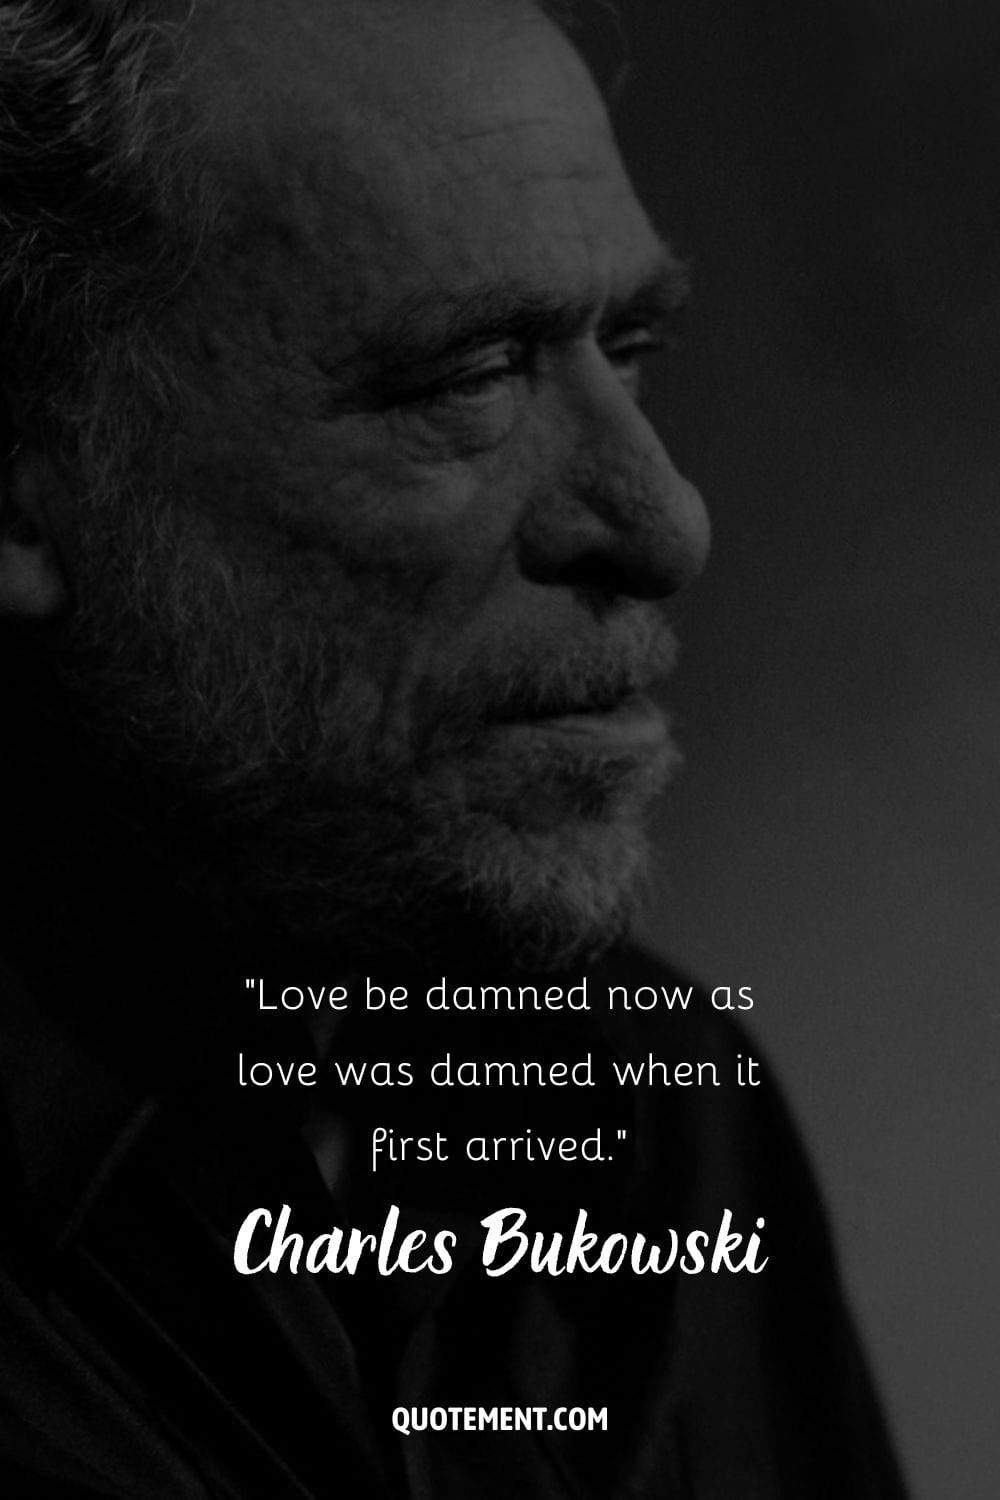 intense side portrait of Charles Bukowski